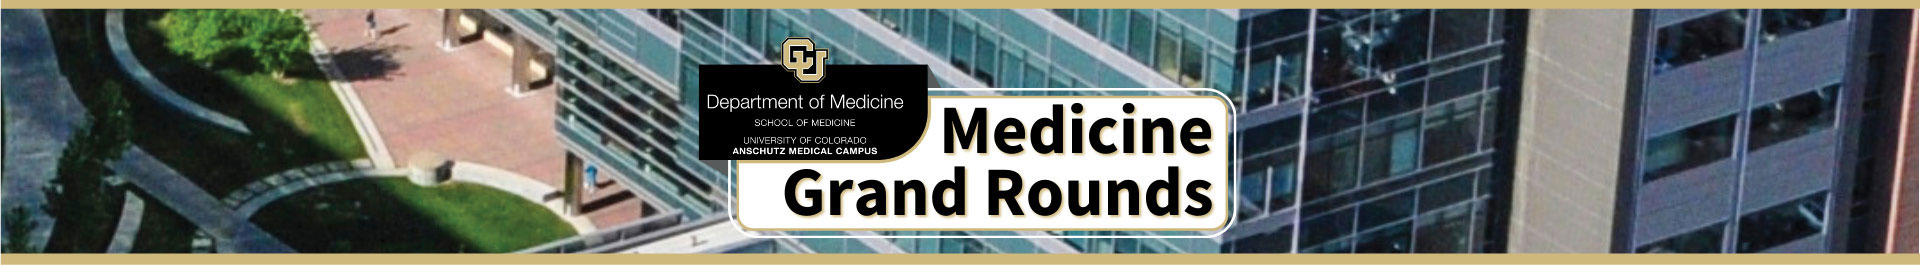 Medicine Grand Rounds